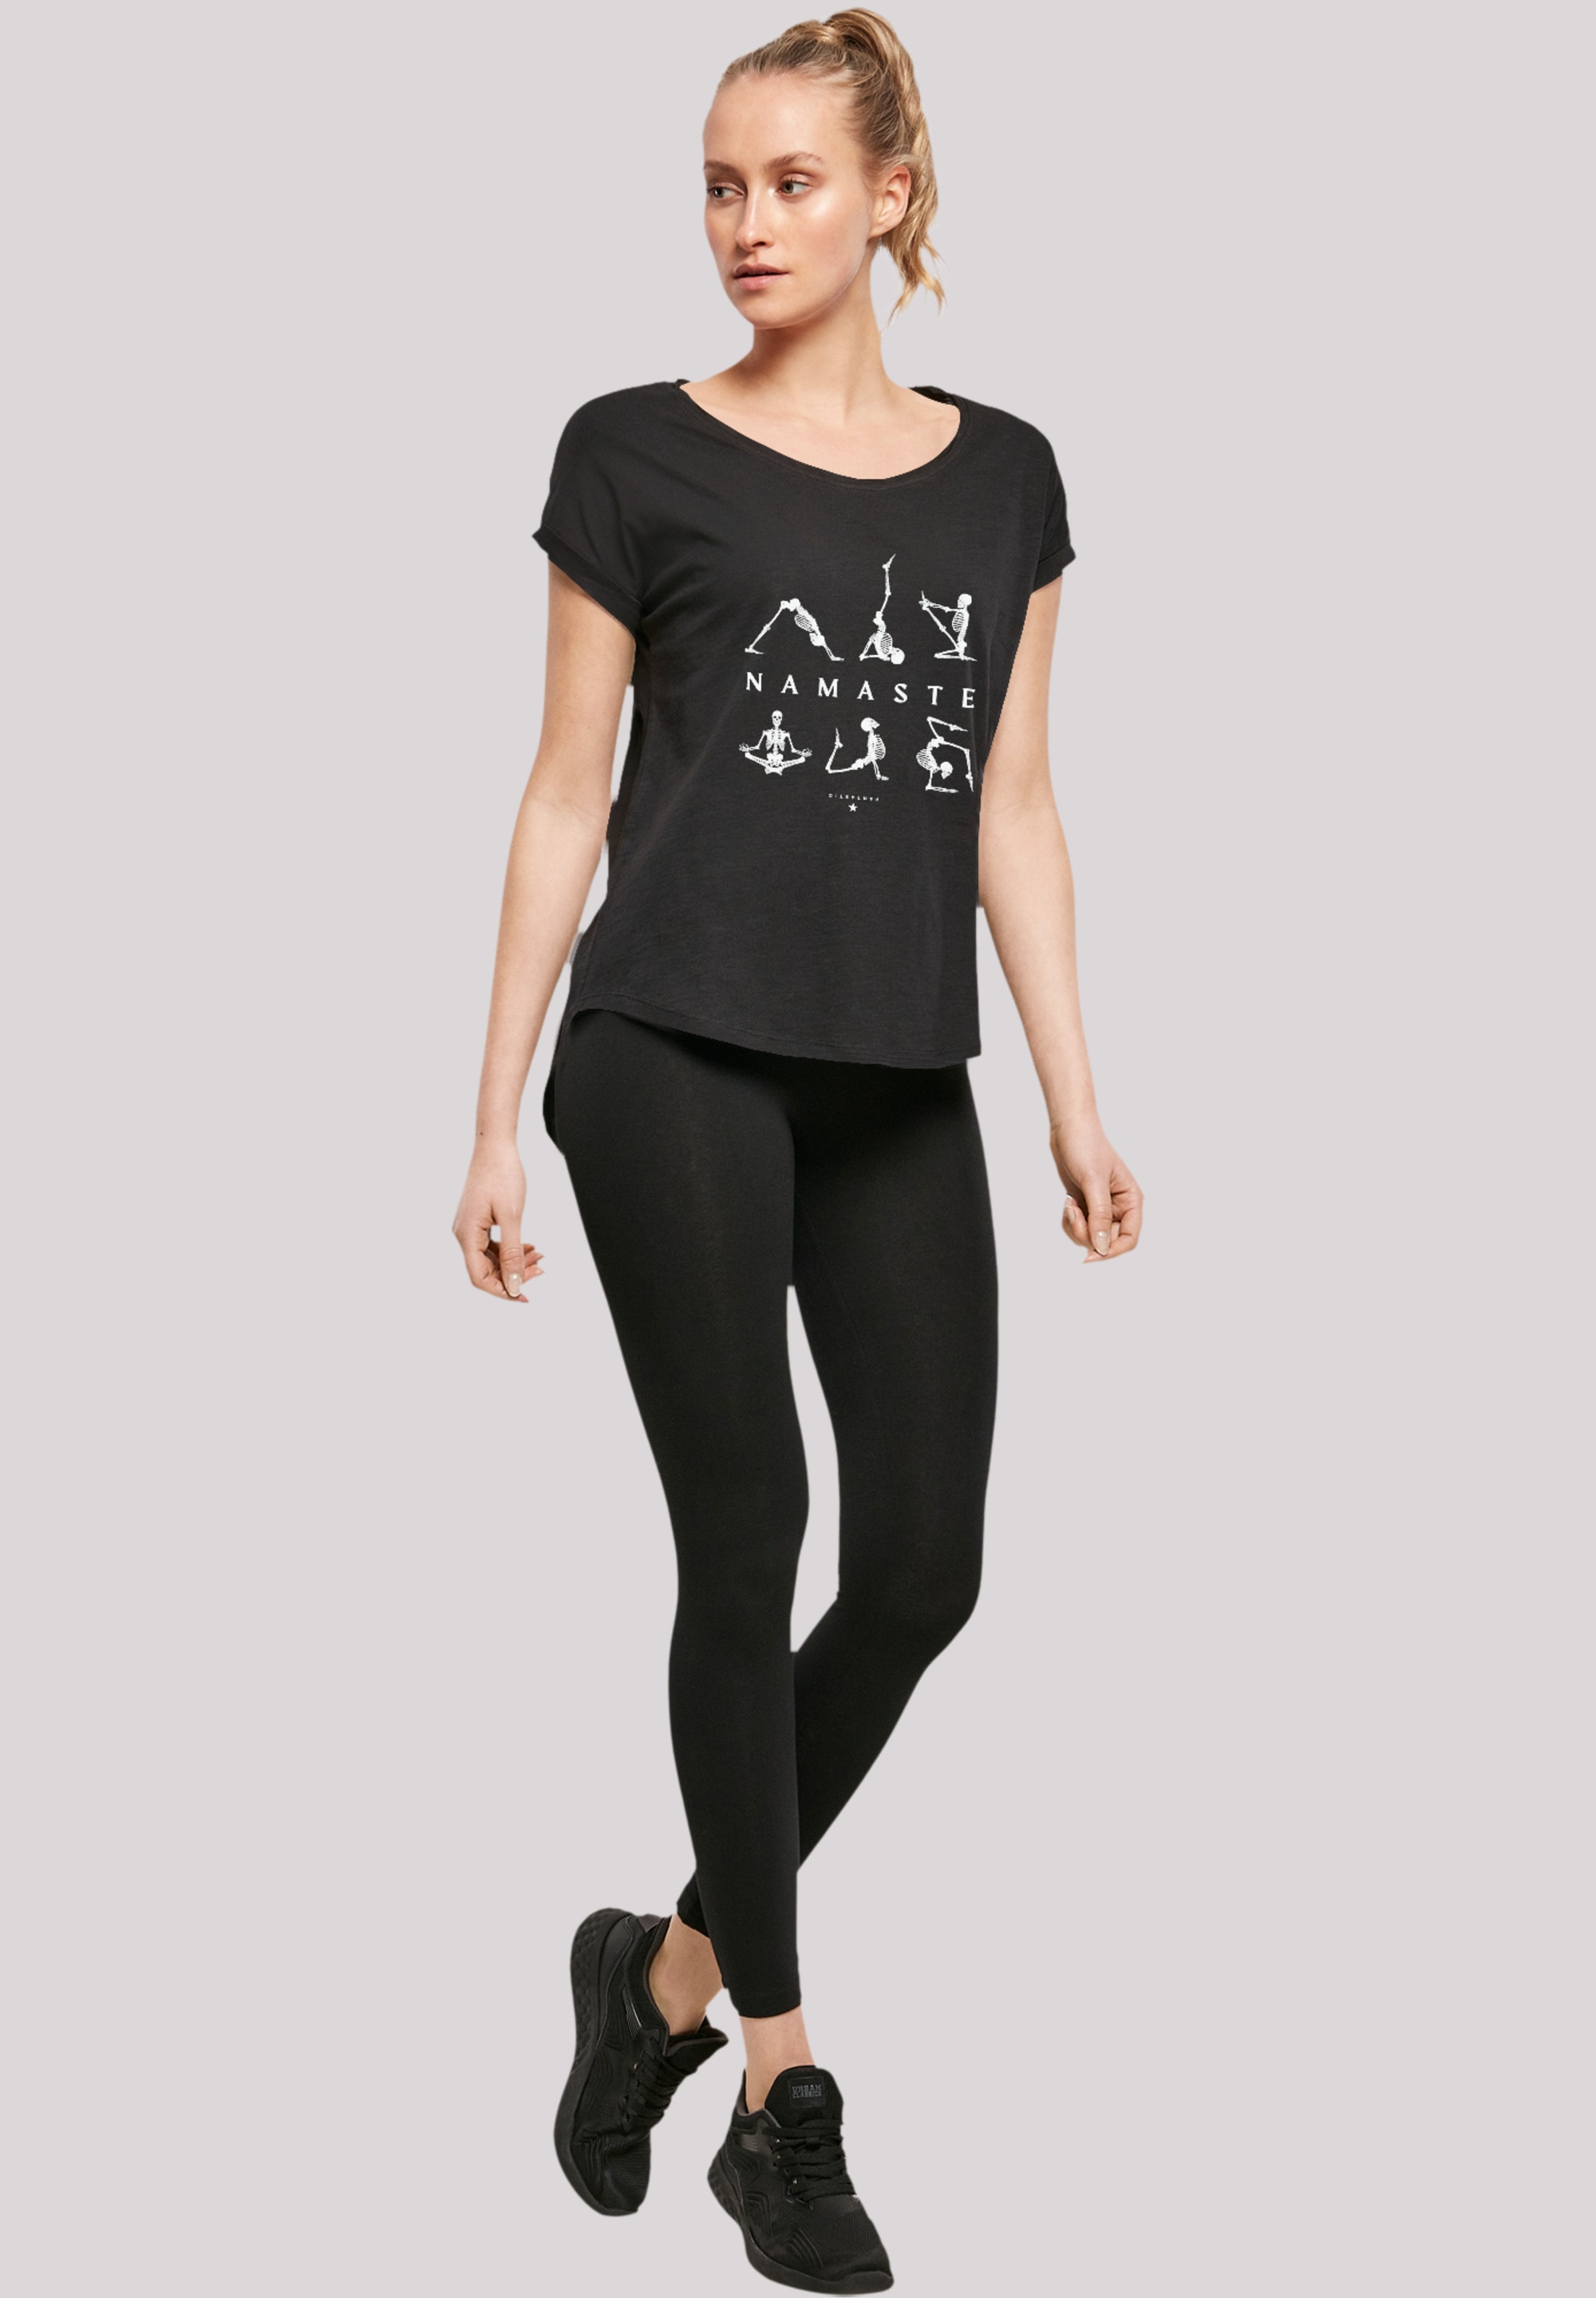 BAUR Halloween«, F4NT4STIC Print »Namaste Skelett | Yoga T-Shirt bestellen